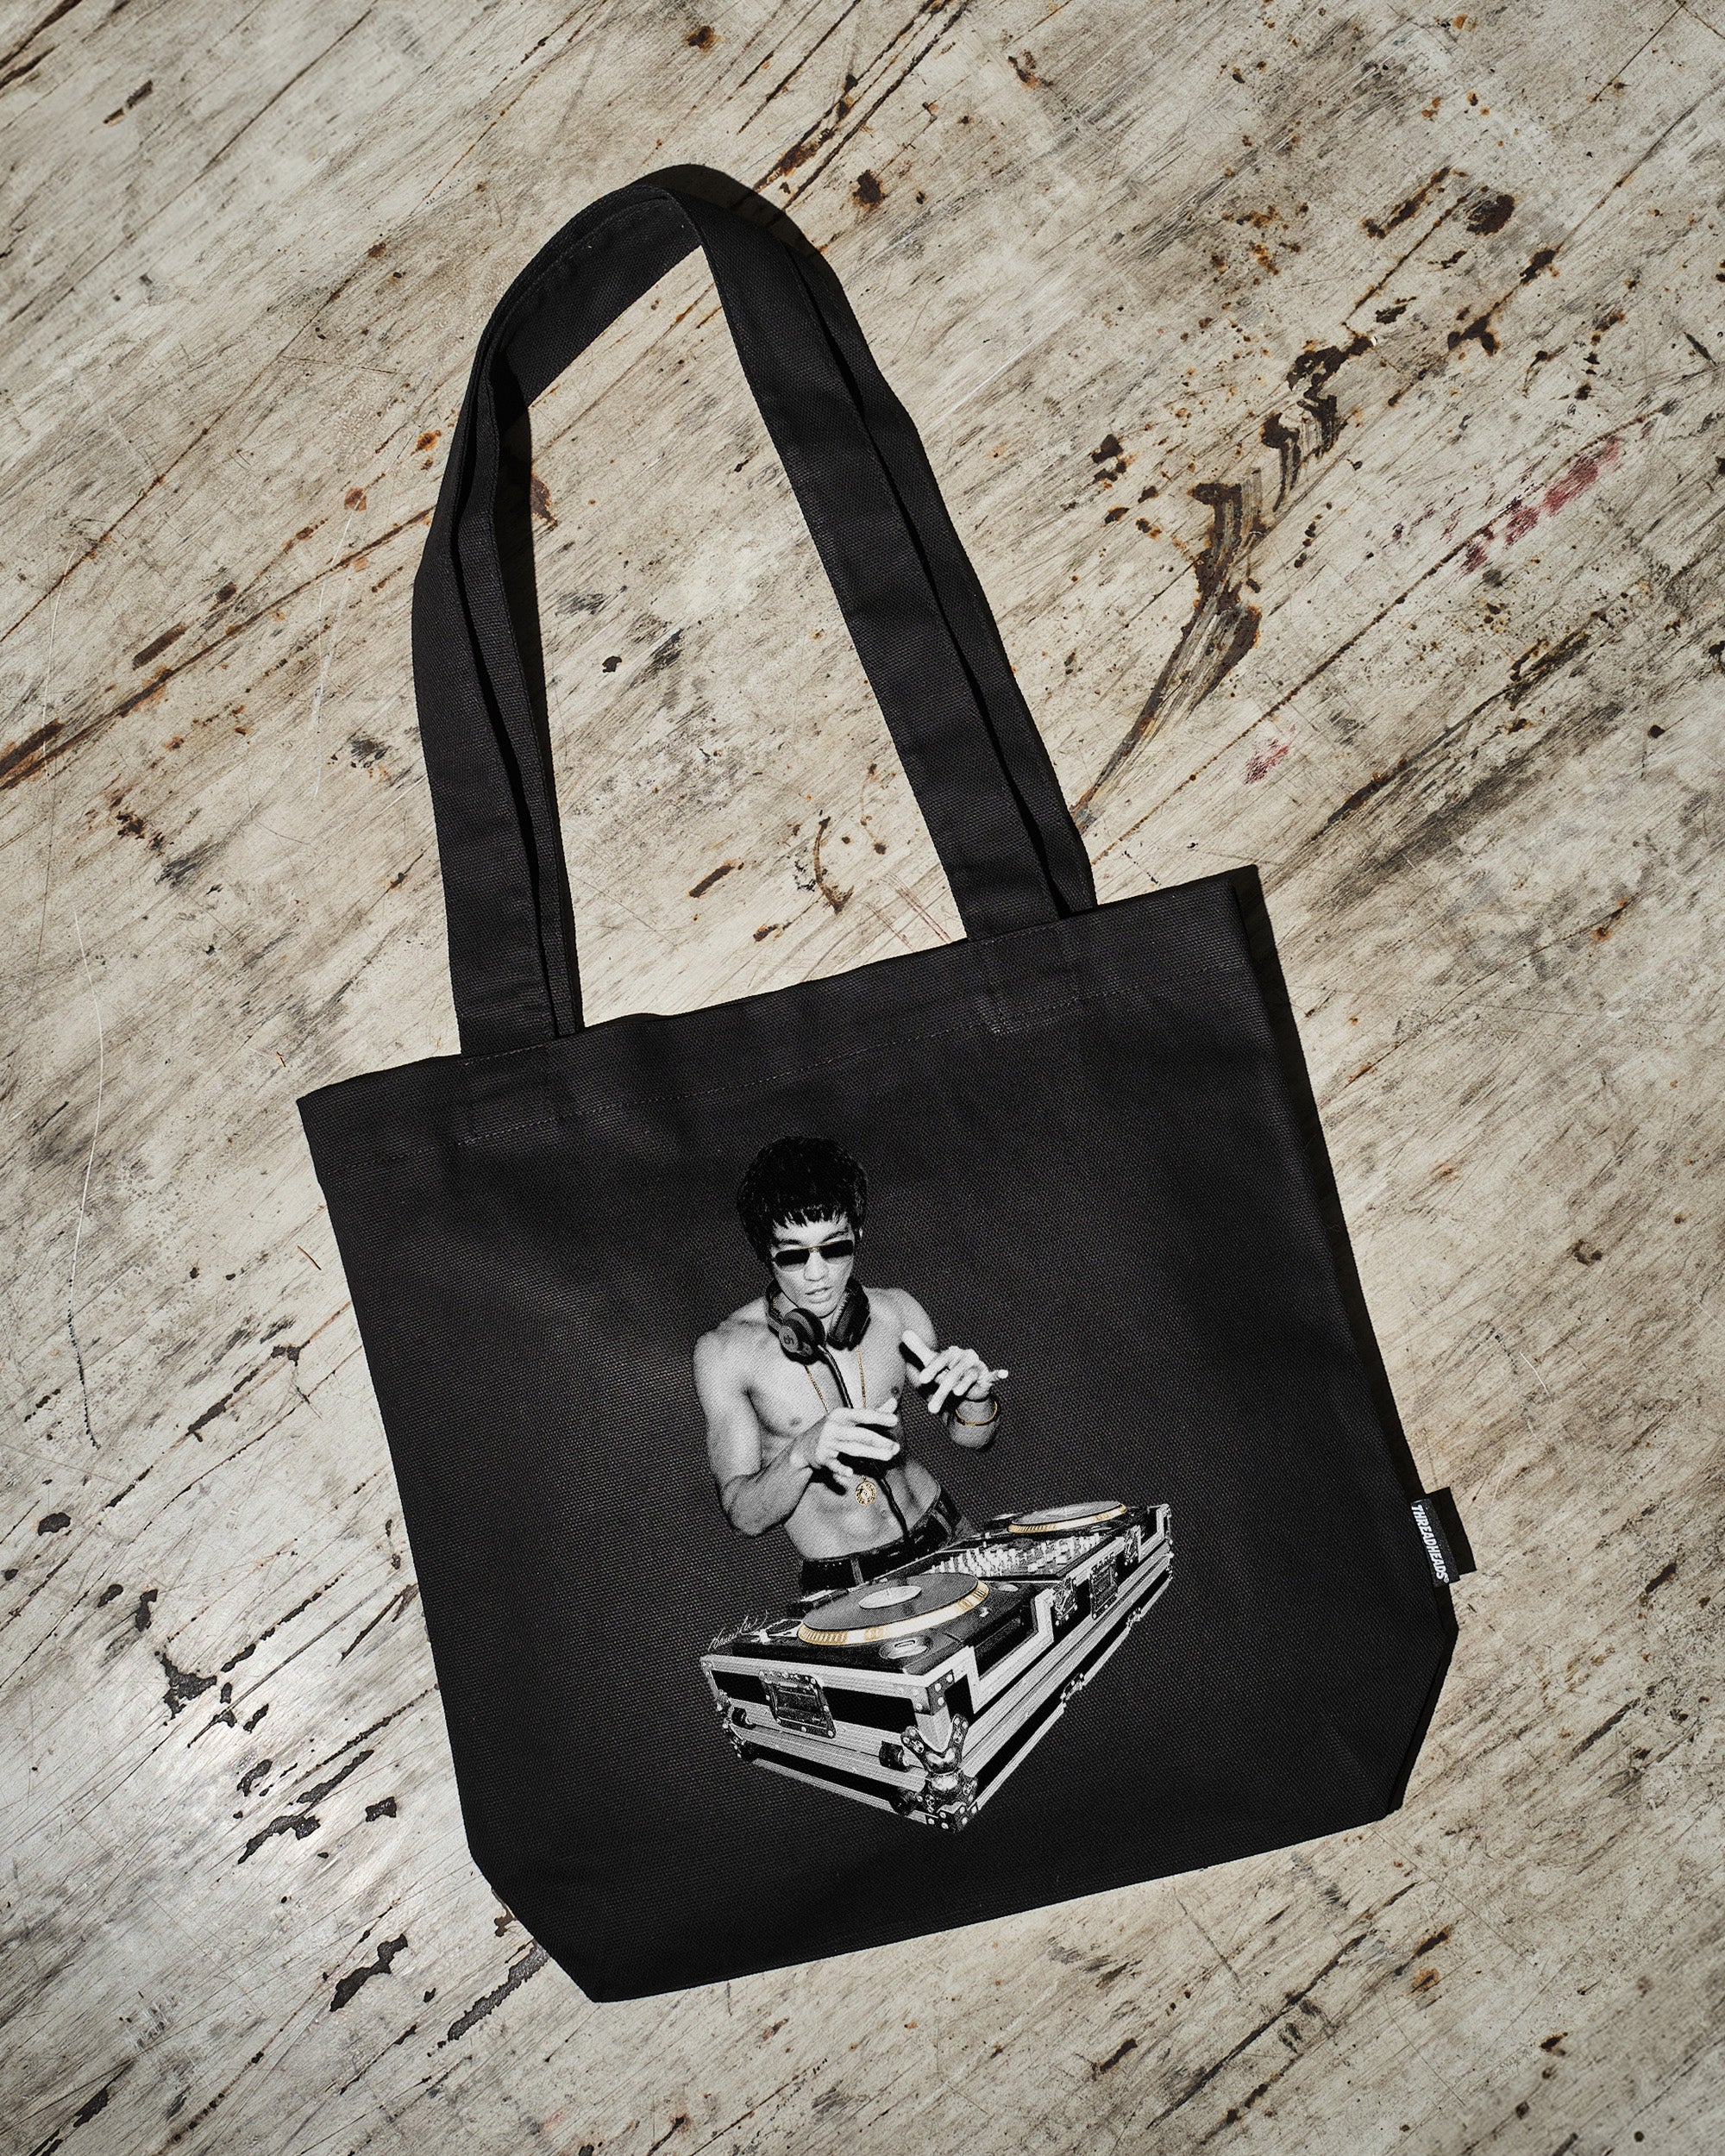 DJ Bruce Lee Tote Bag